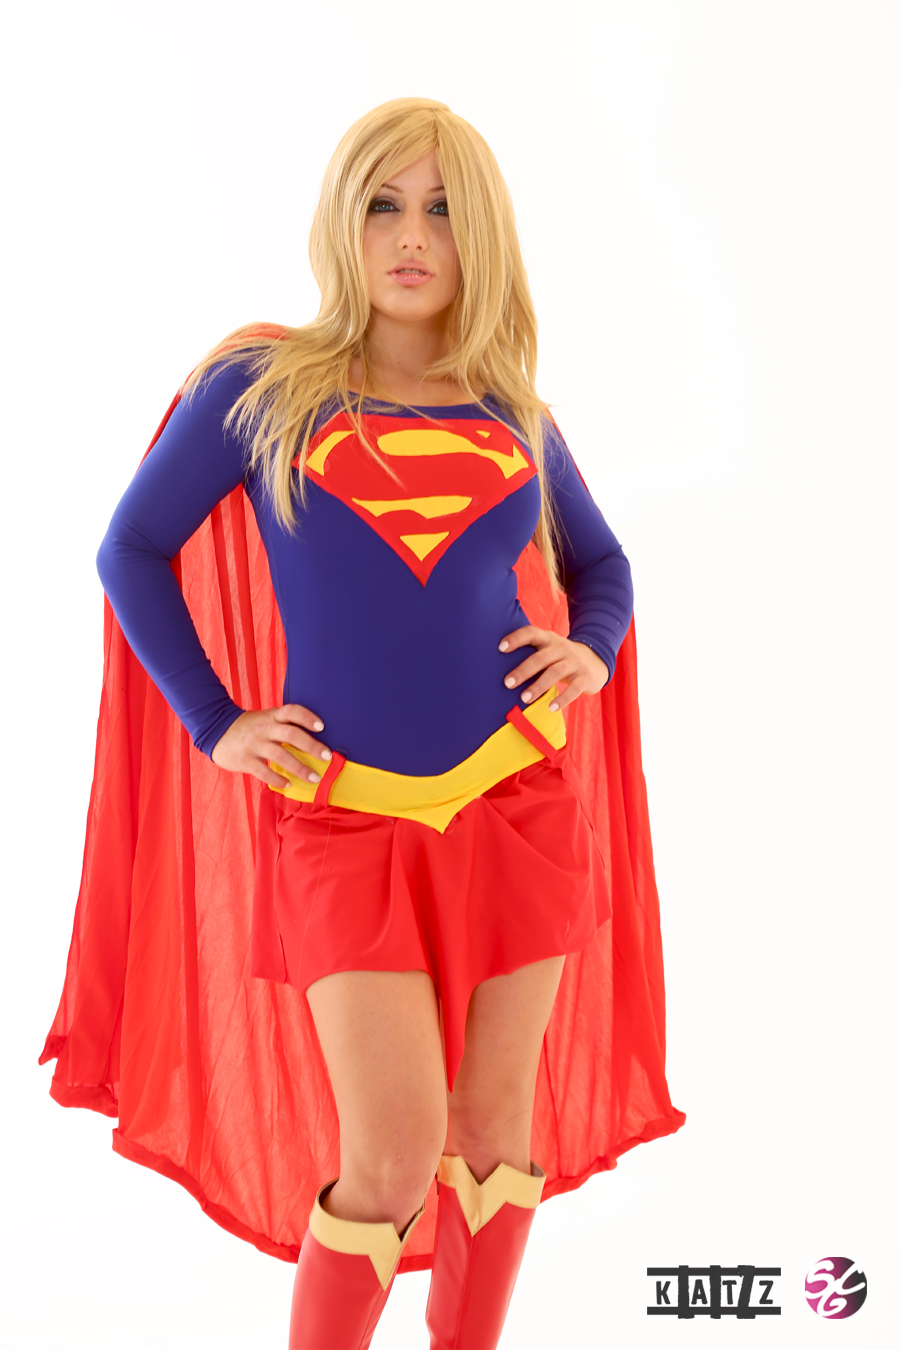 Liz Katz supergirl cosplay